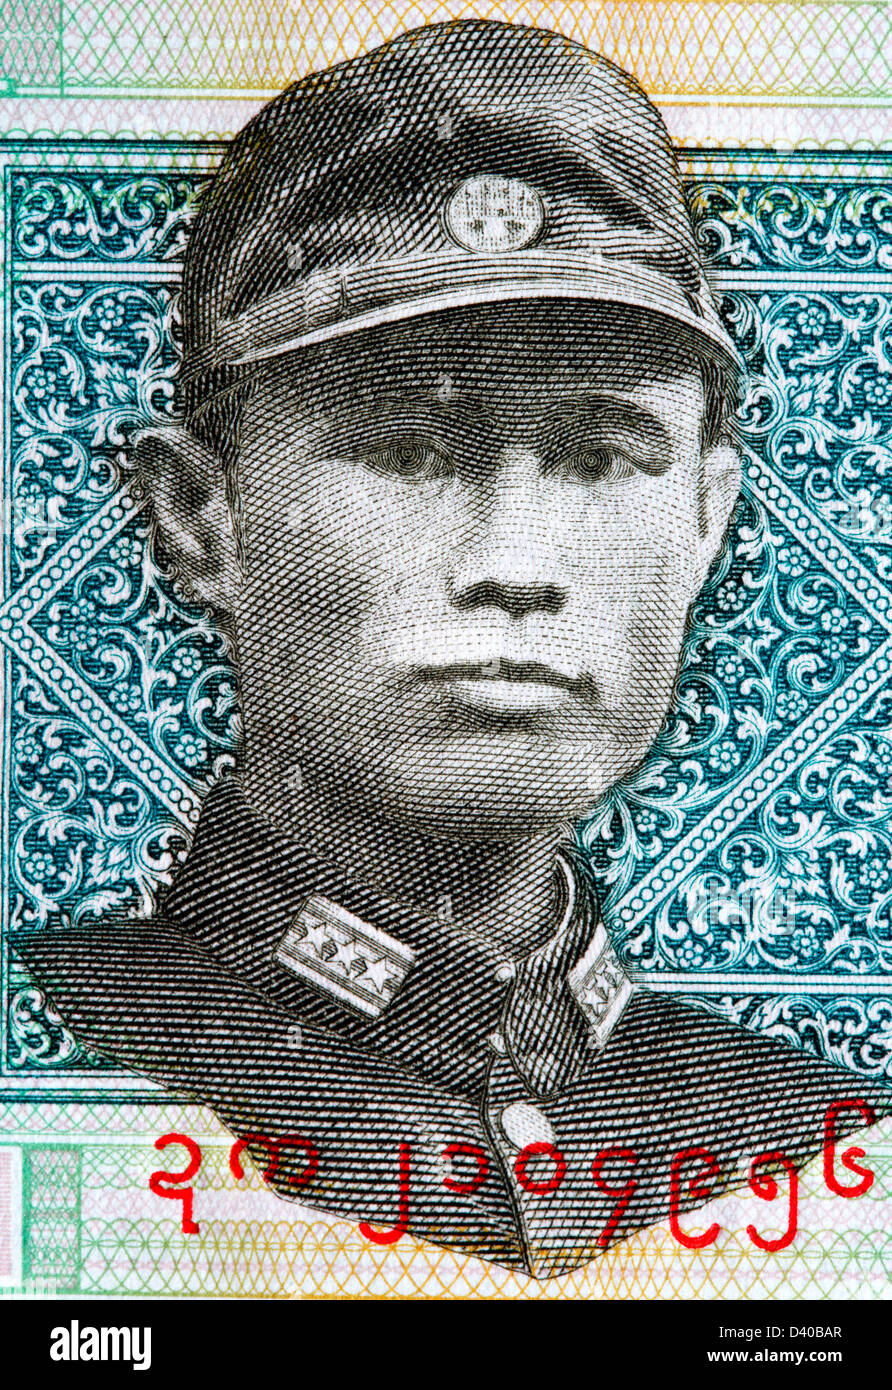 Porträt des General Aung San aus 1 Kyat Banknote, Burma, 1972 Stockfoto